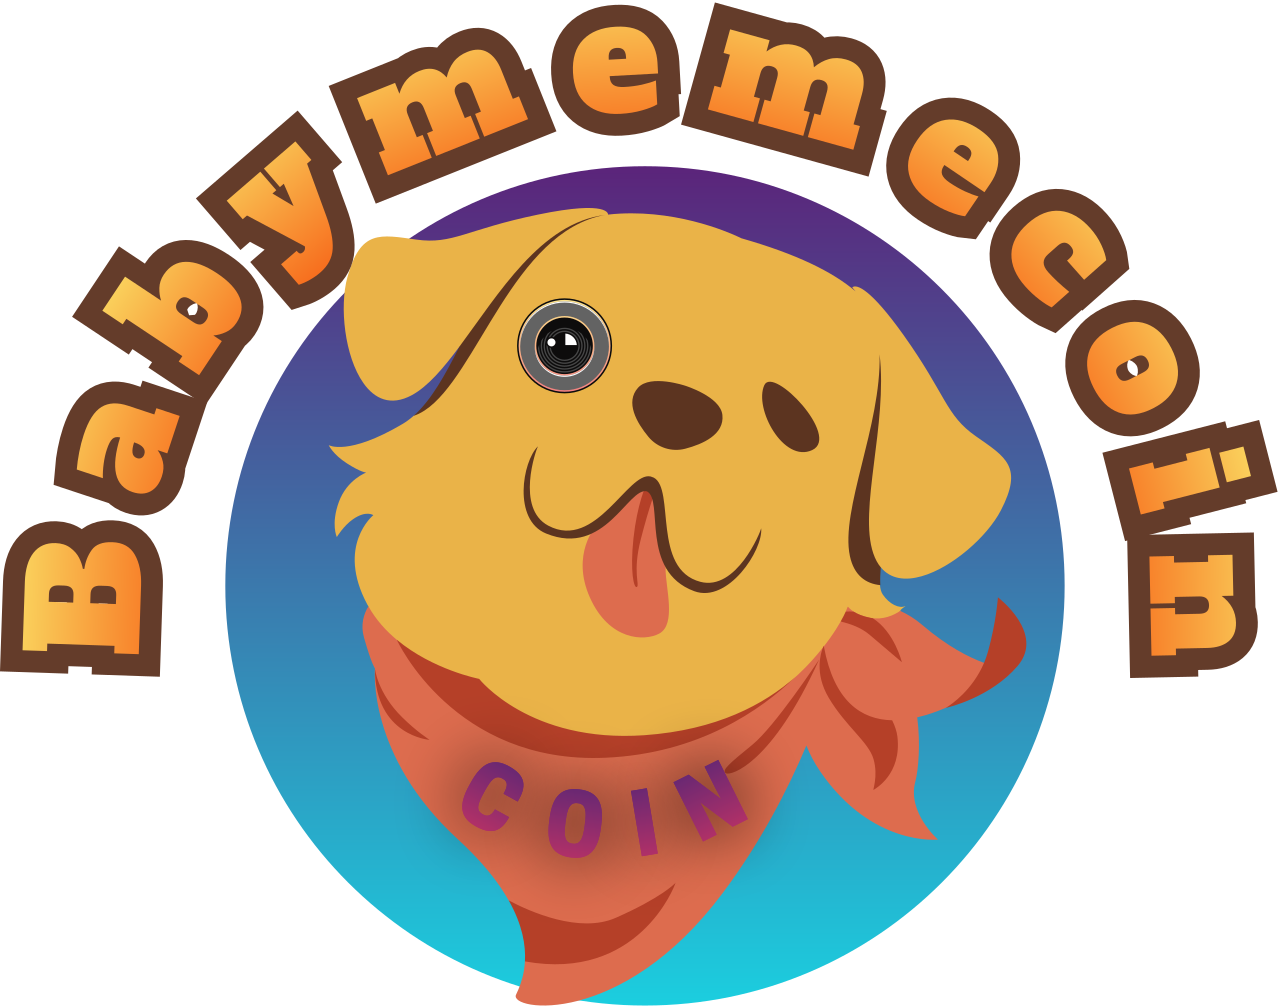 Babymemecoin's logo